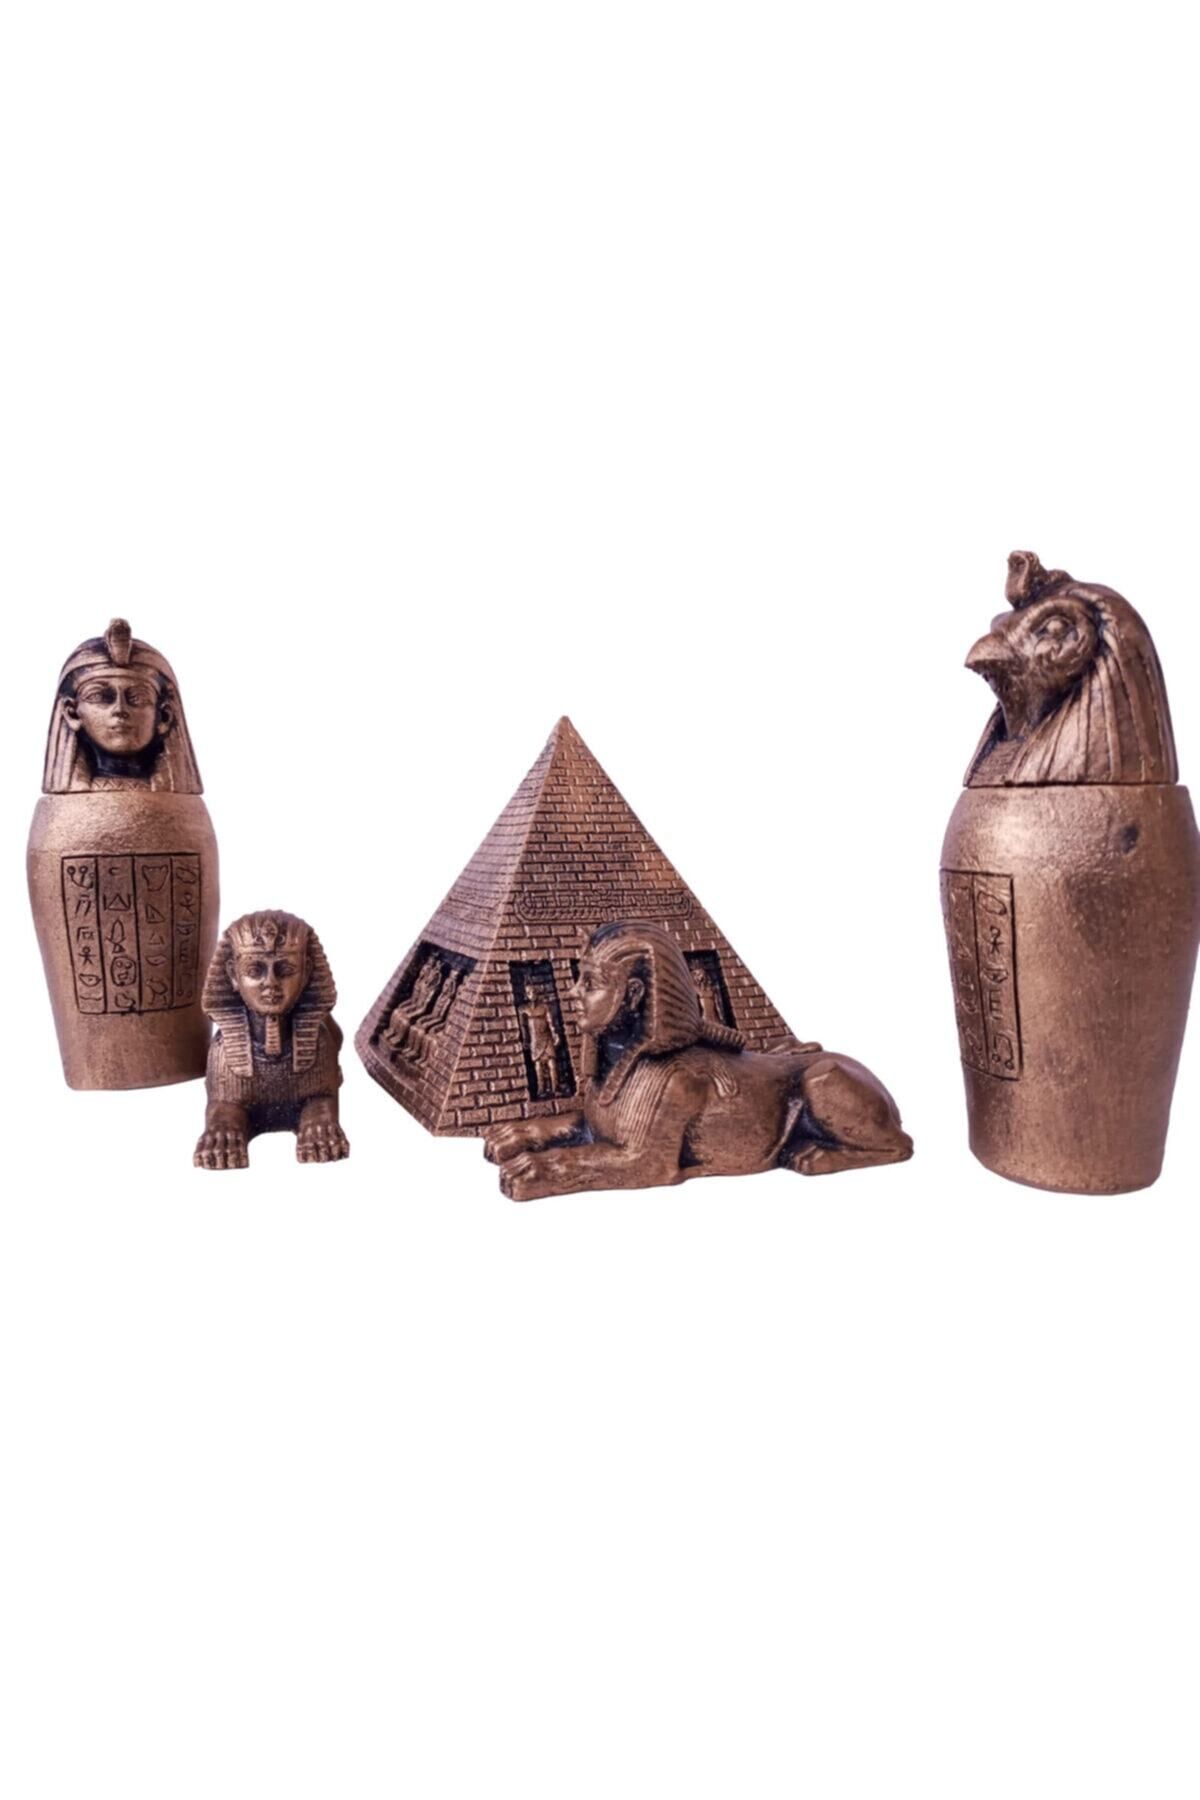 GÖKÇEN HOBİ Firavun Piramit Horus Sfenks Set(REÇİNE MALZEME)